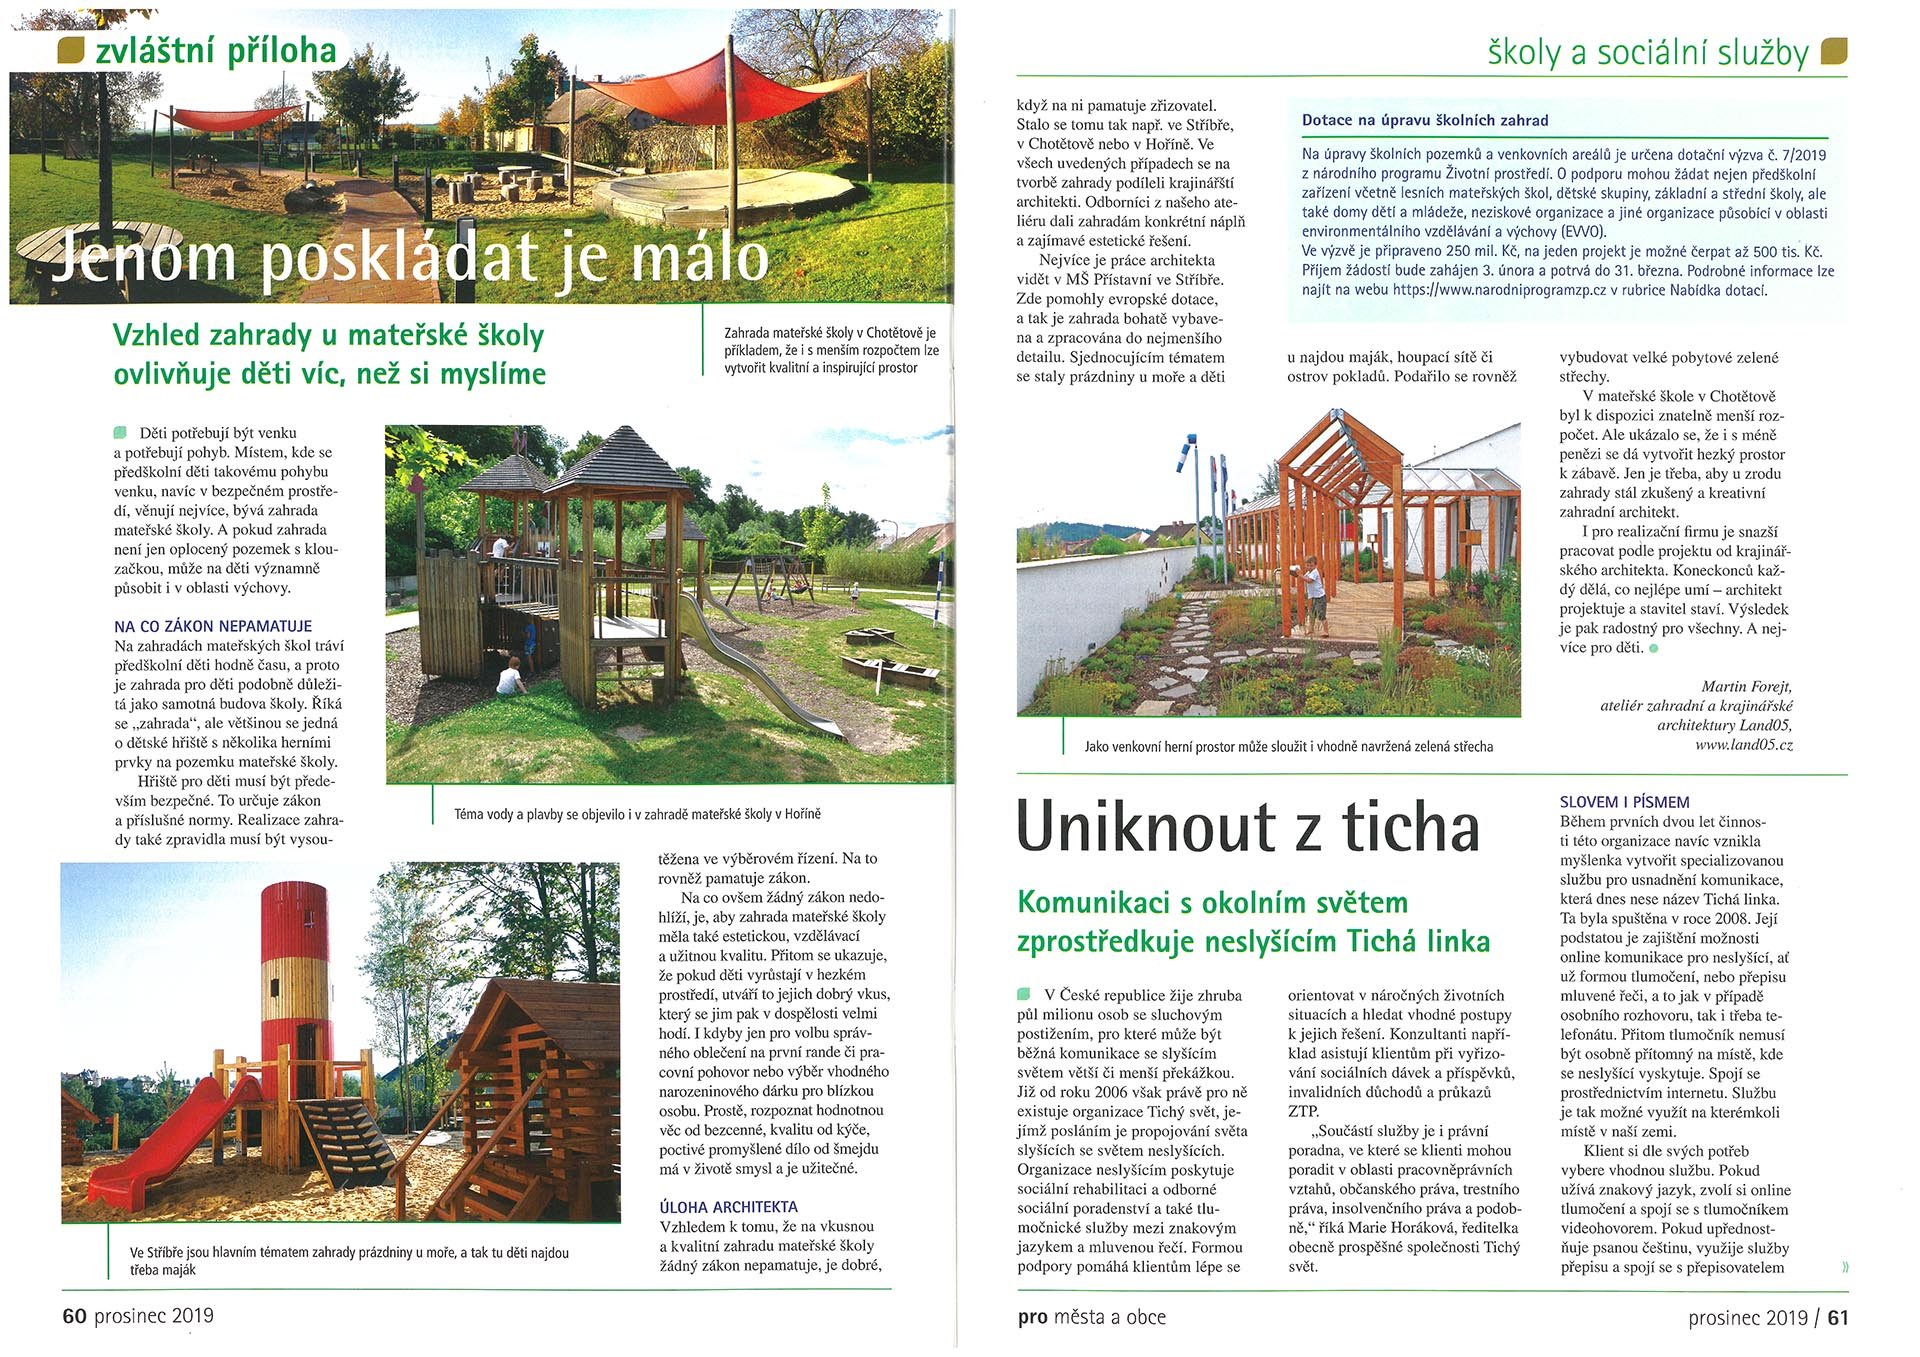 Magazine Pro města a obce 12/2019 - Garden Design for Nursery Schools